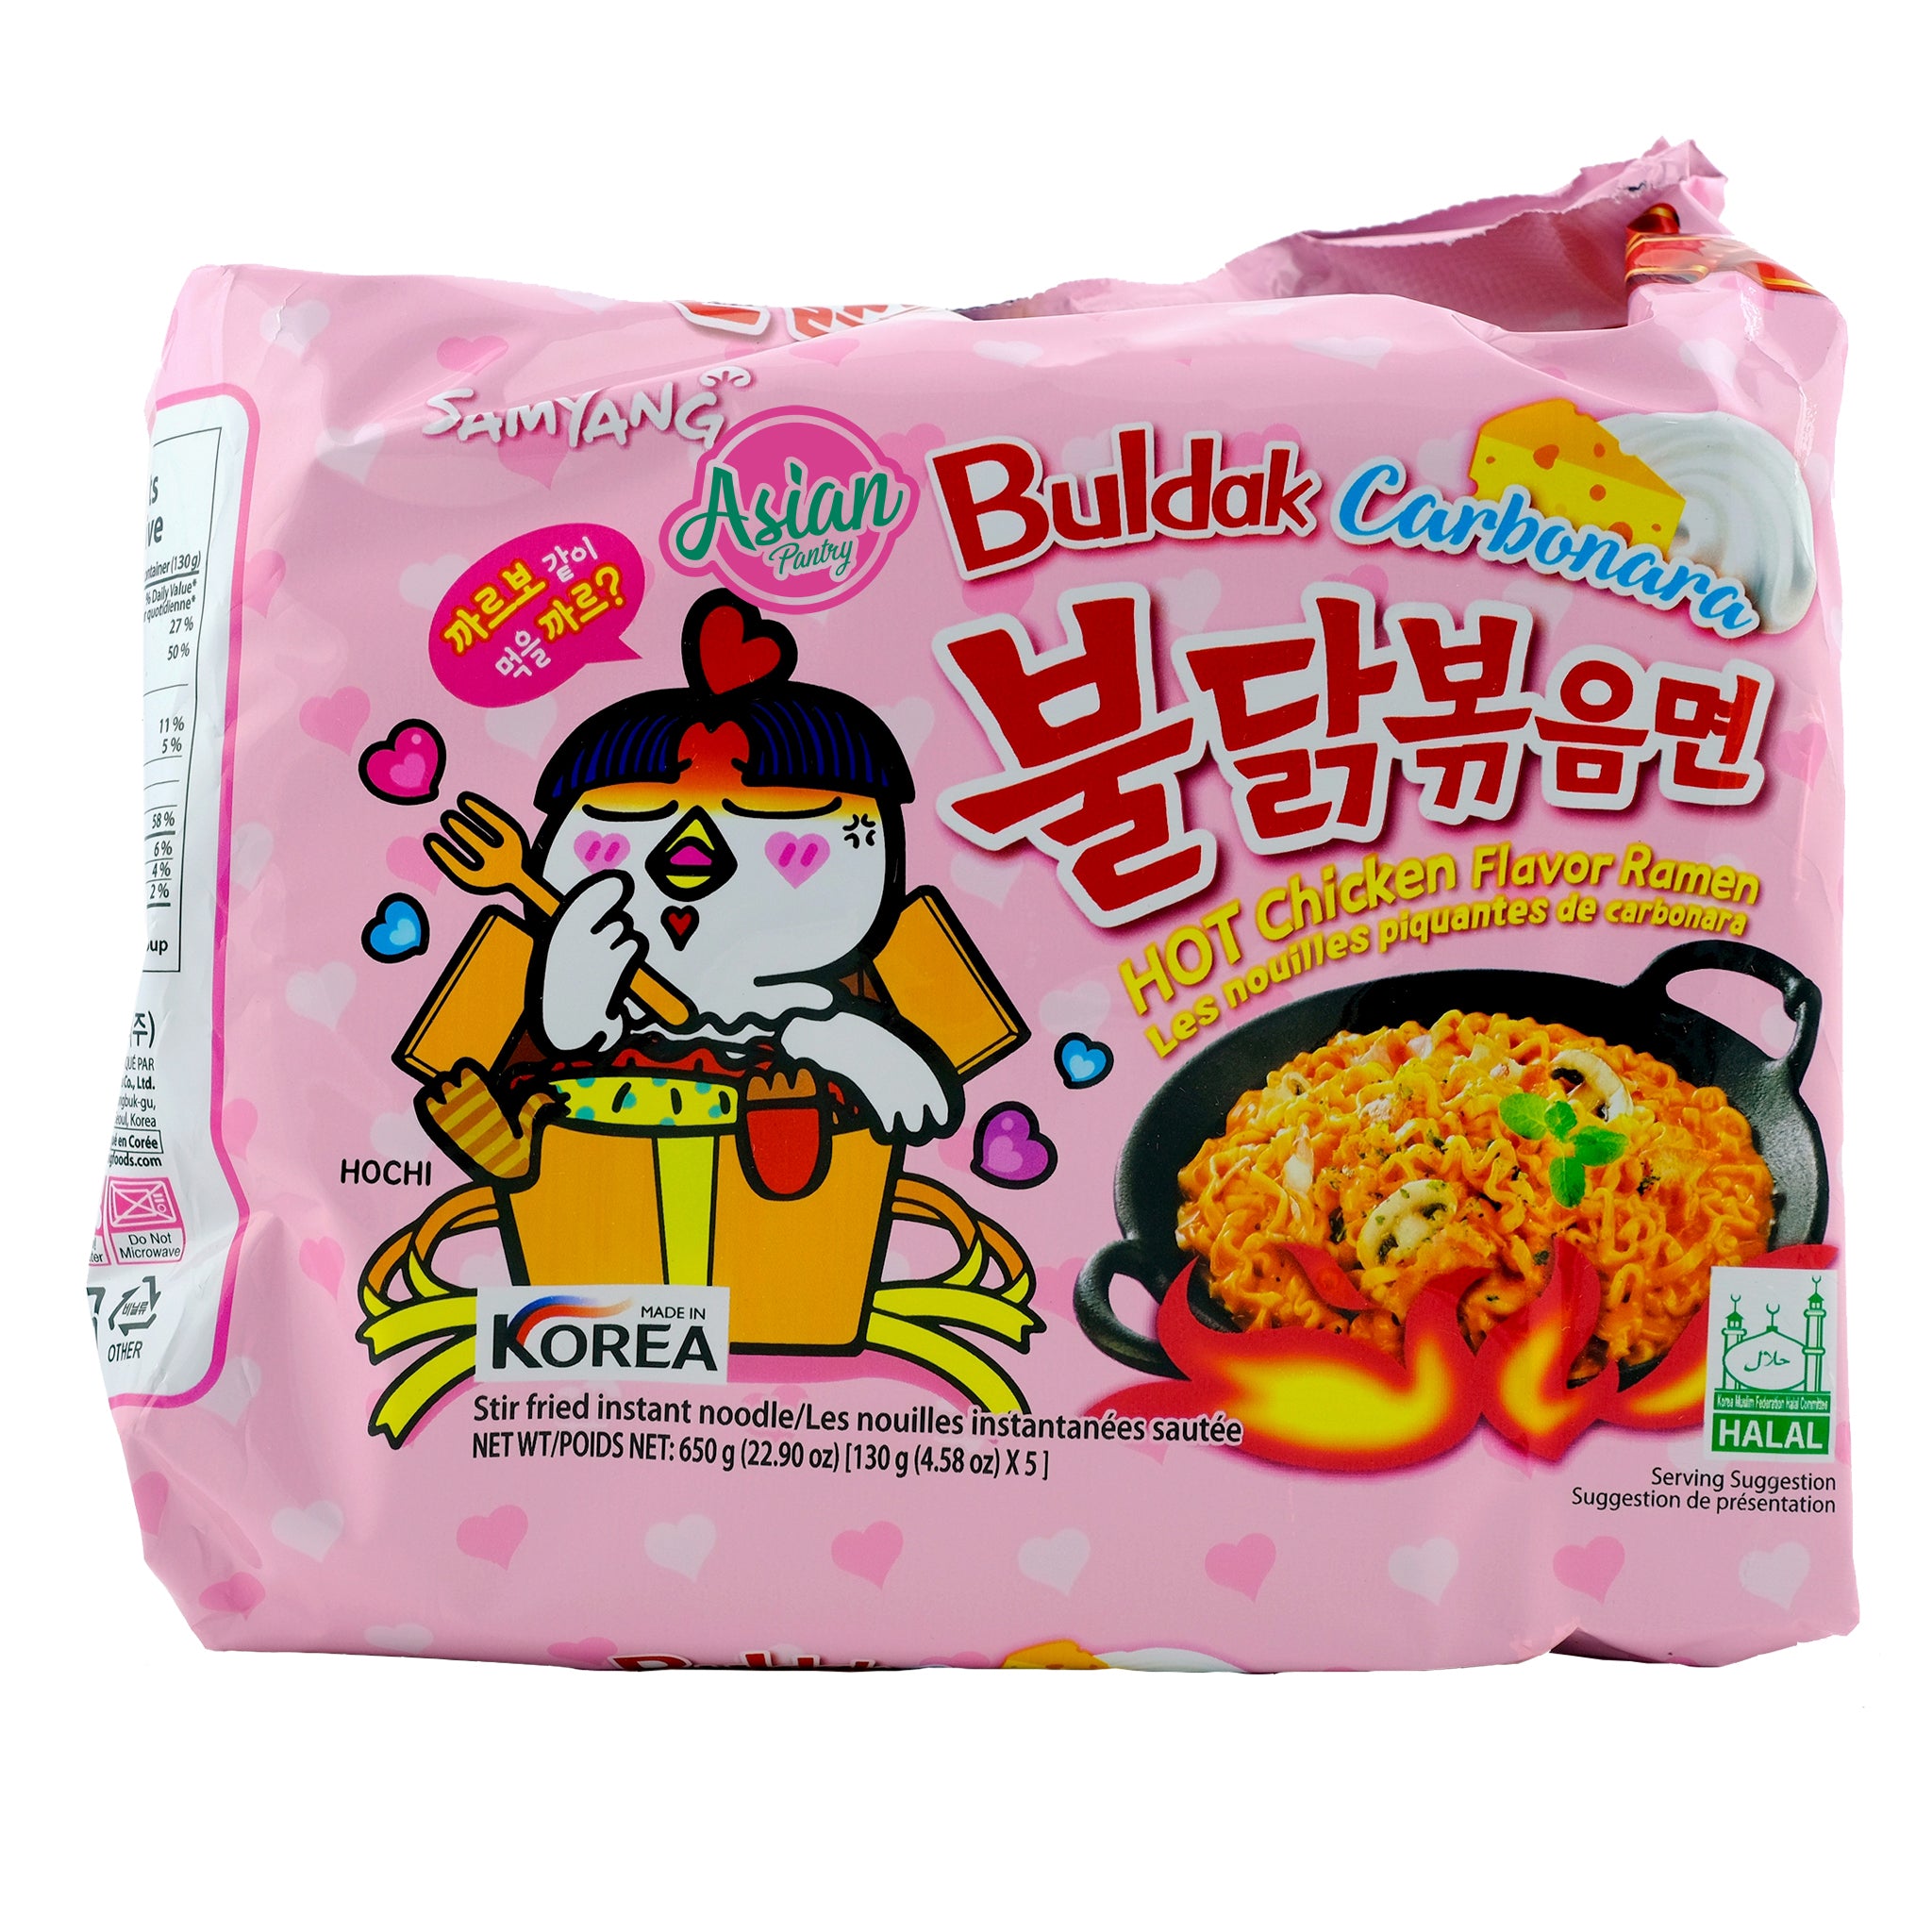 Samyang Buldak Topokki Carbo Hot Chicken Flavor, 179 g, Asian Soups &  Ramen